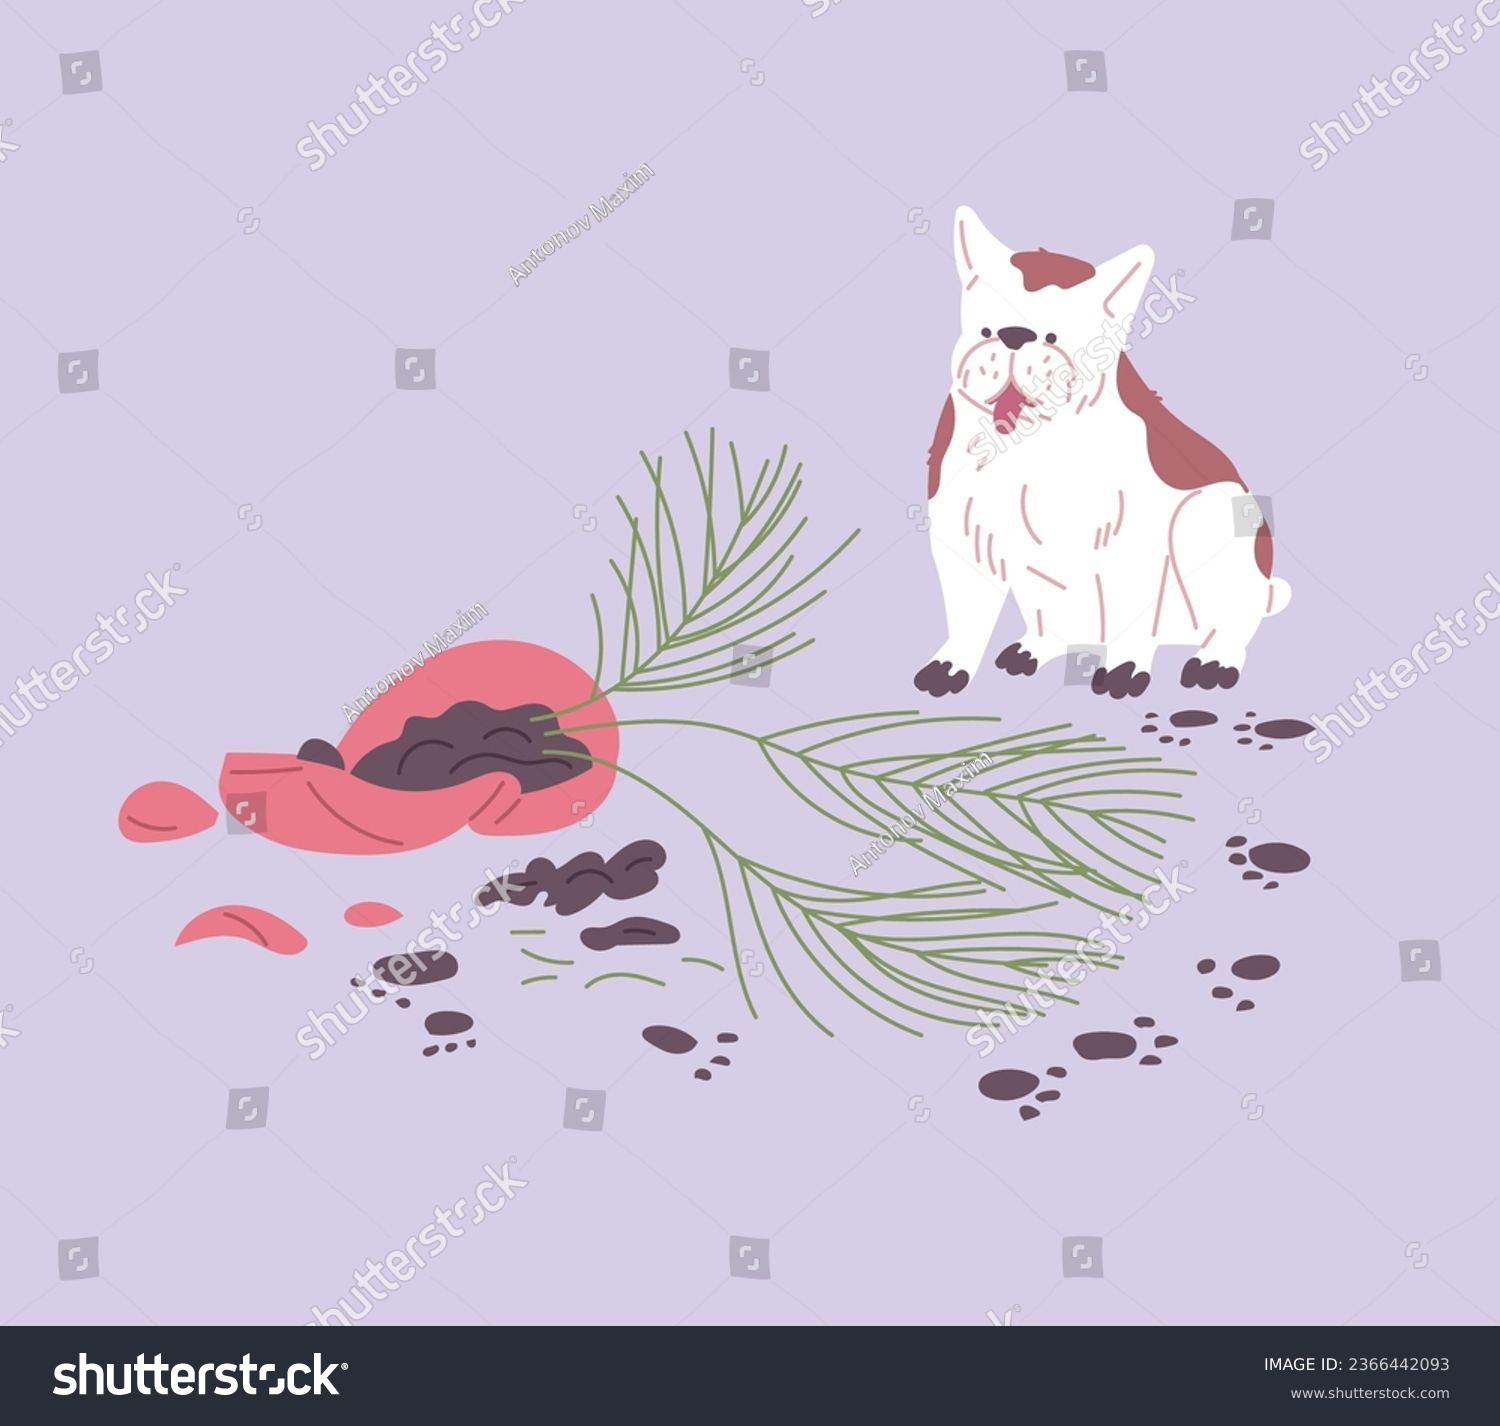 SVG of Dog sitting next to broken flower pot flat style, vector illustration isolated on purple background. Decorative design element, pet's behavior. Dog pet making mess svg